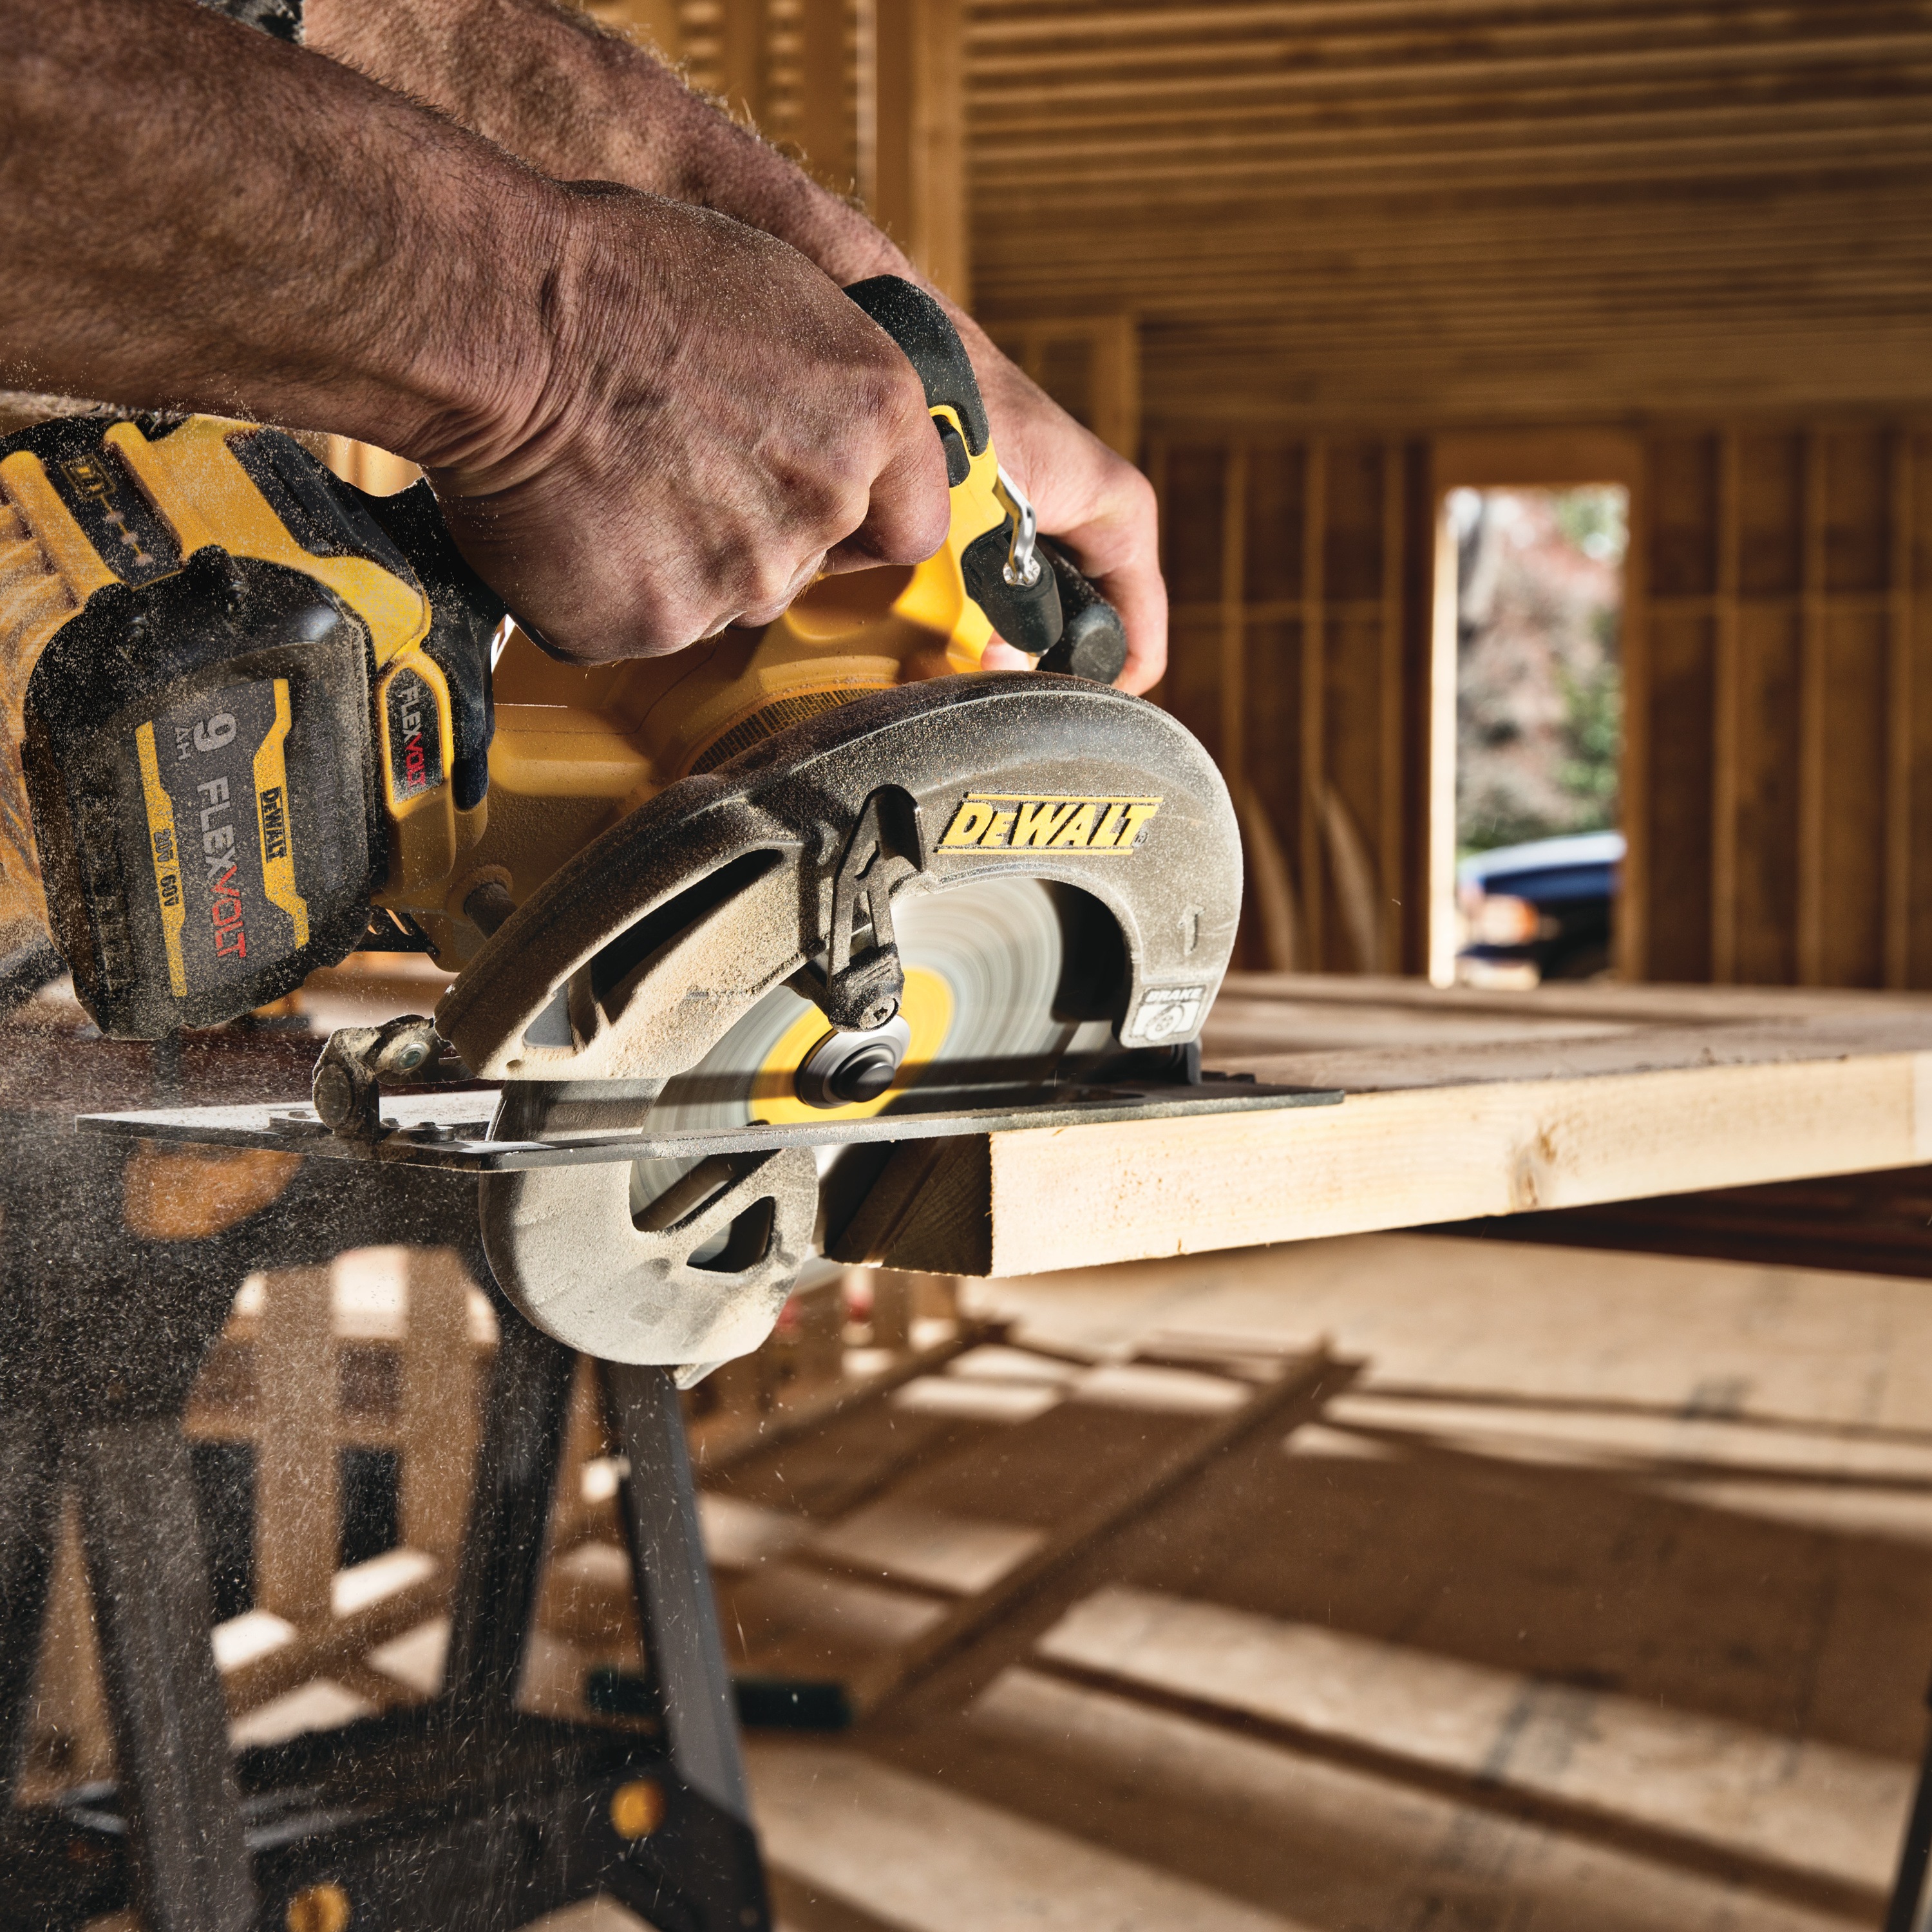 FLEXVOLT brushless cordless circular saw with brake kit cutting wood at an angle.